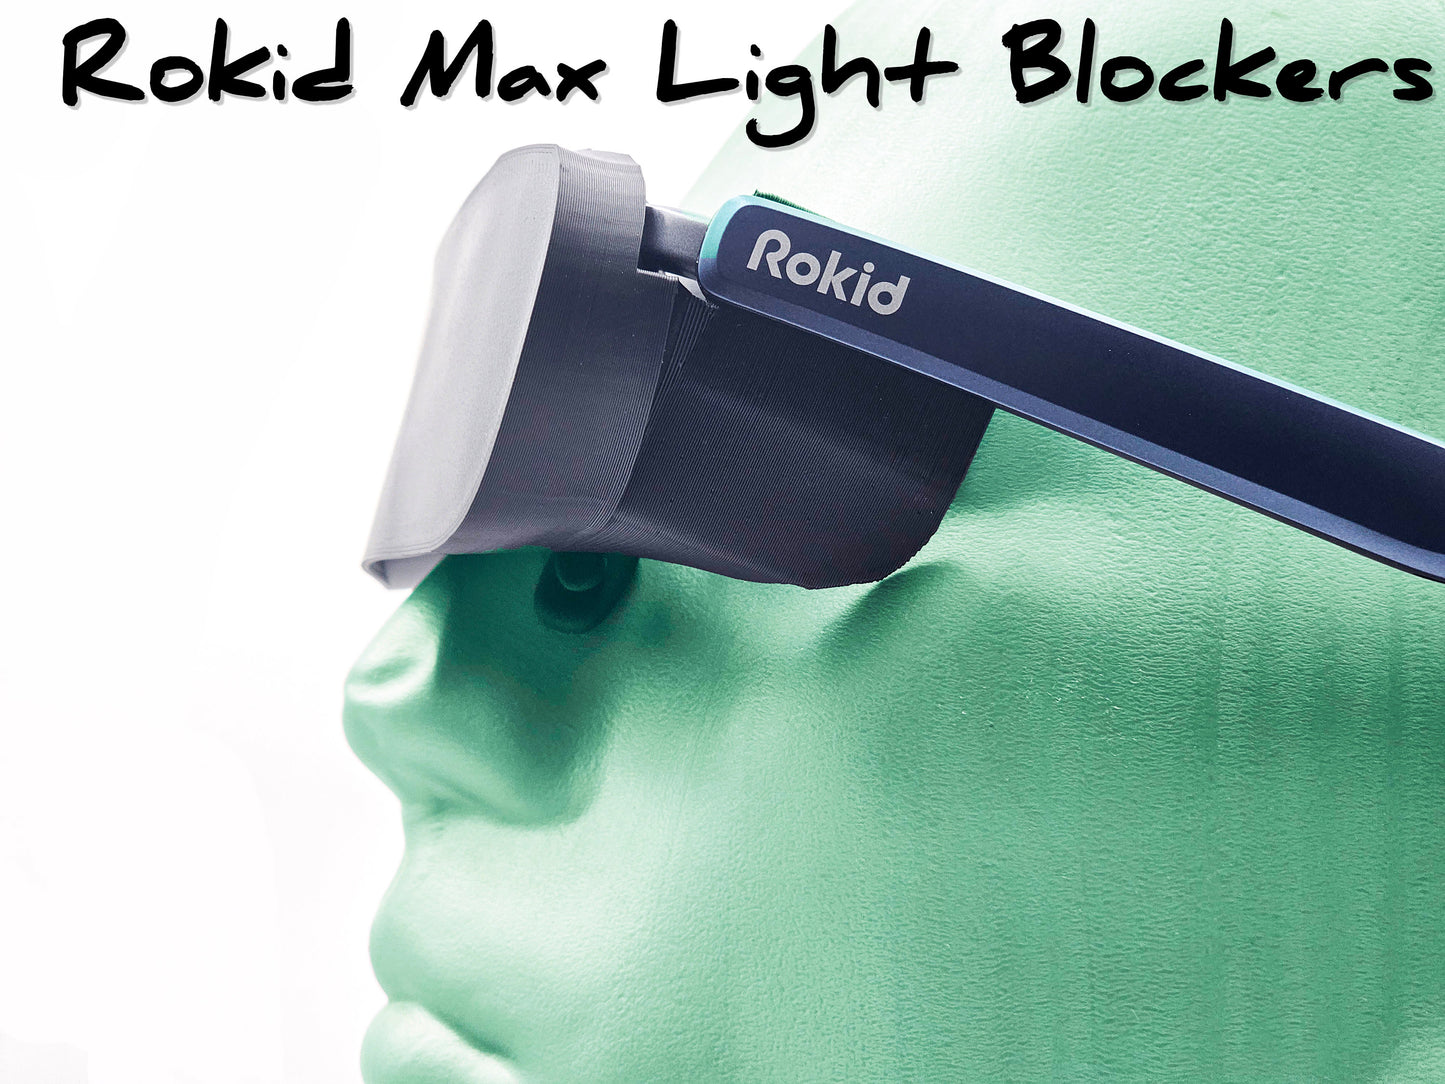 Rokid Max AR Glasses Light Blockers!